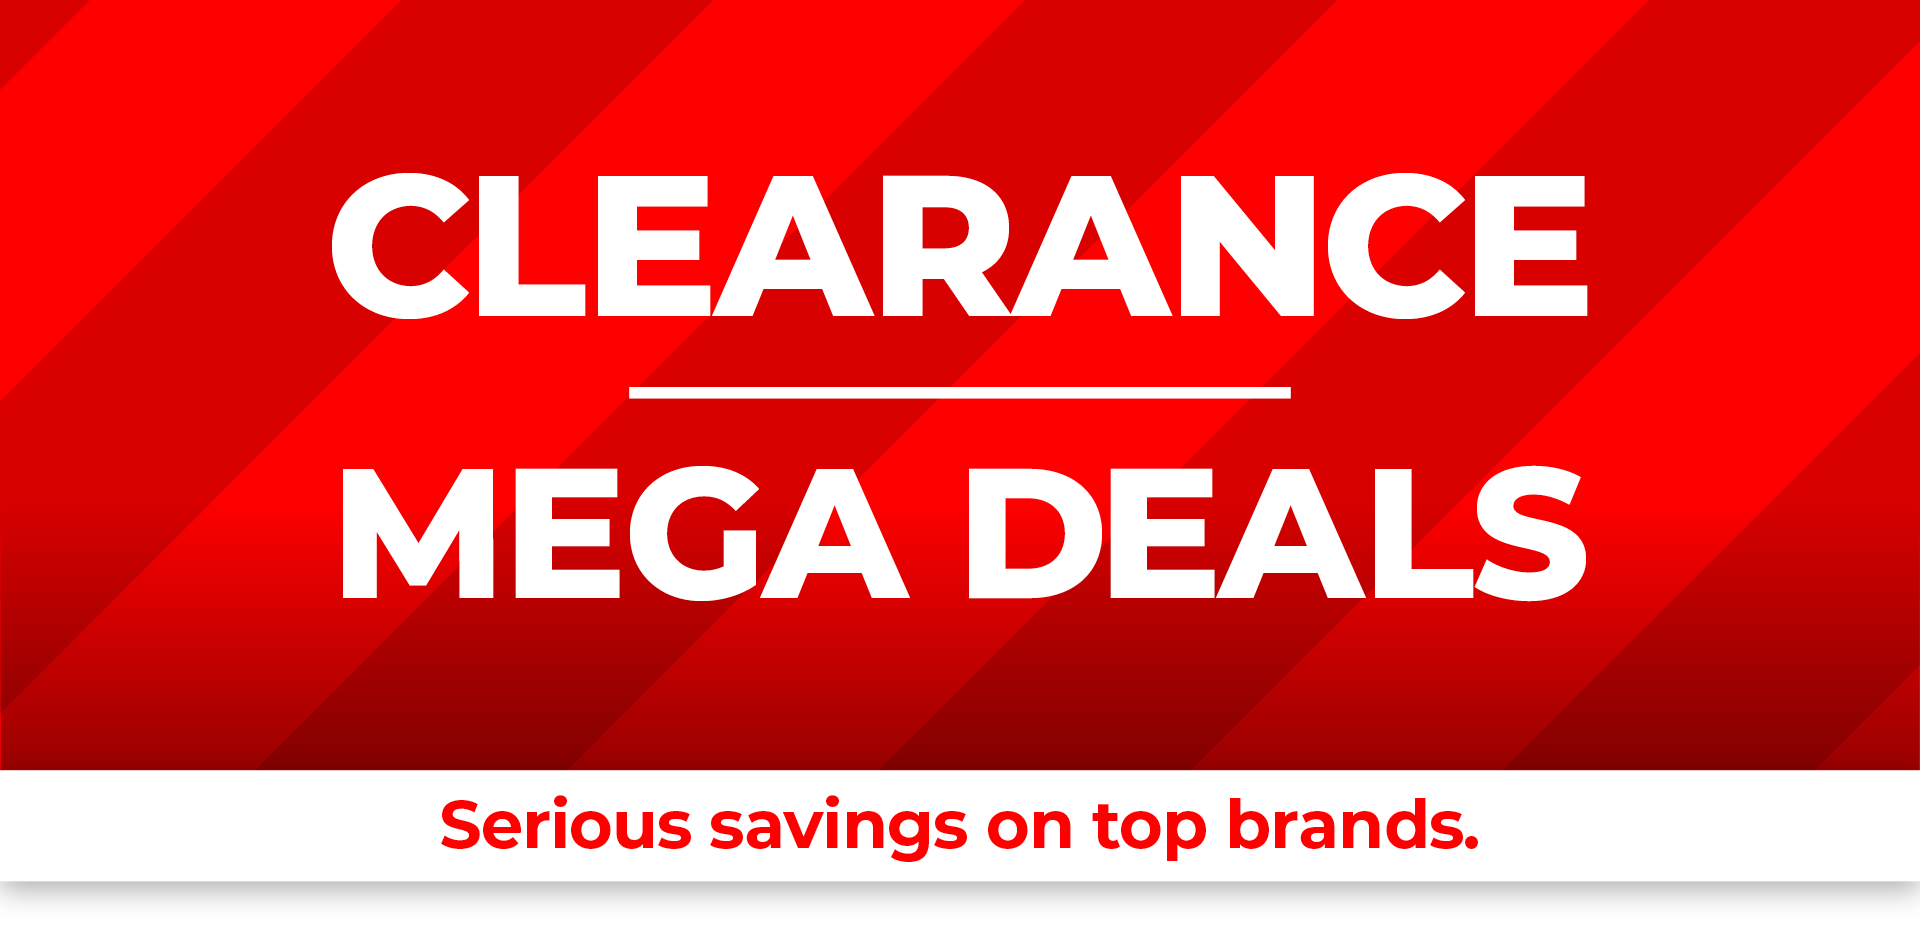 Clearance Mega Deals - Serious savings on top brands.